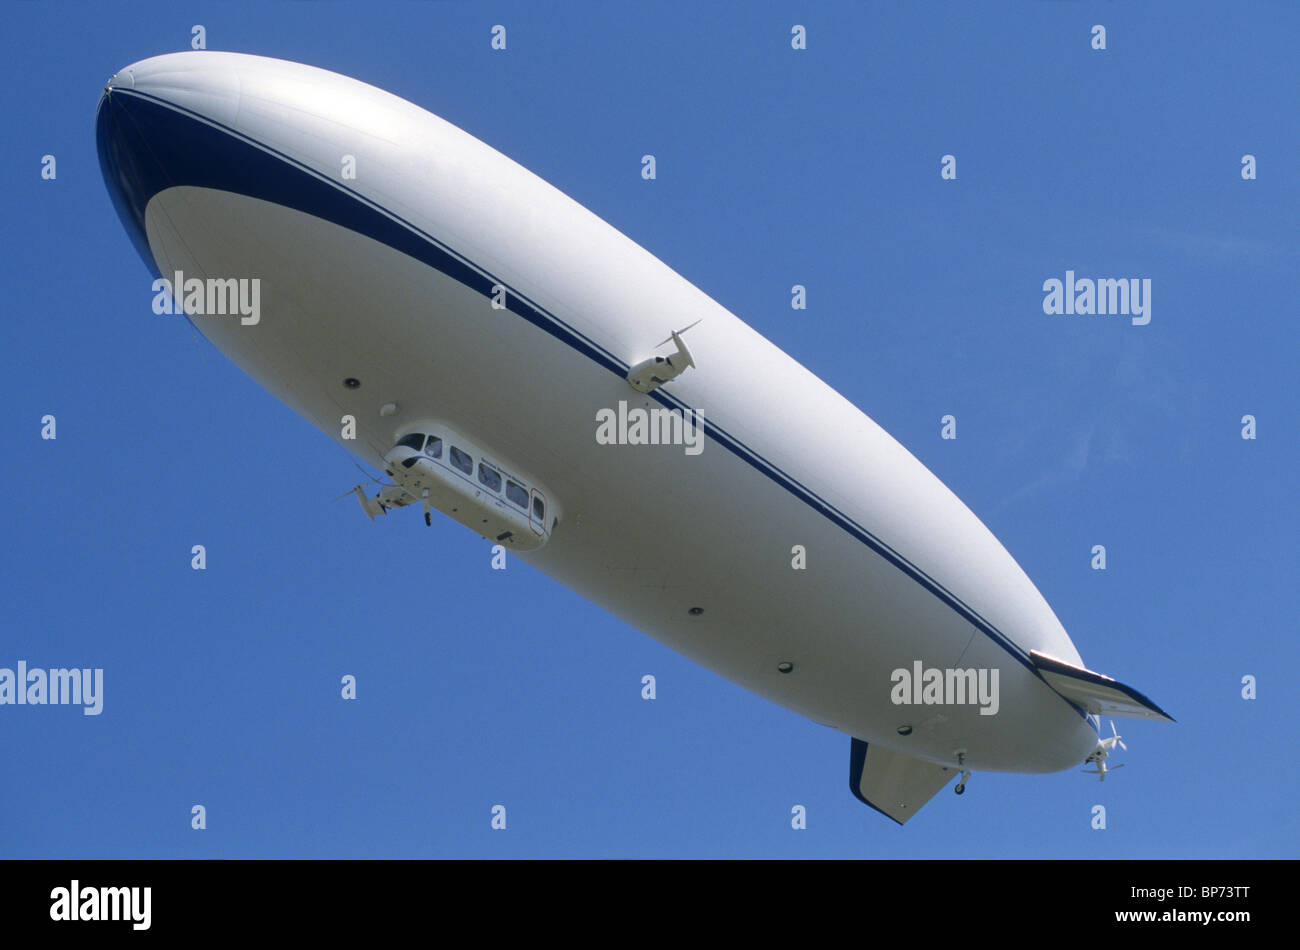 Airship dirigible Zeppelin NT floating in blue sky near Friedrichshafen, Baden-Württemberg, Germany Stock Photo